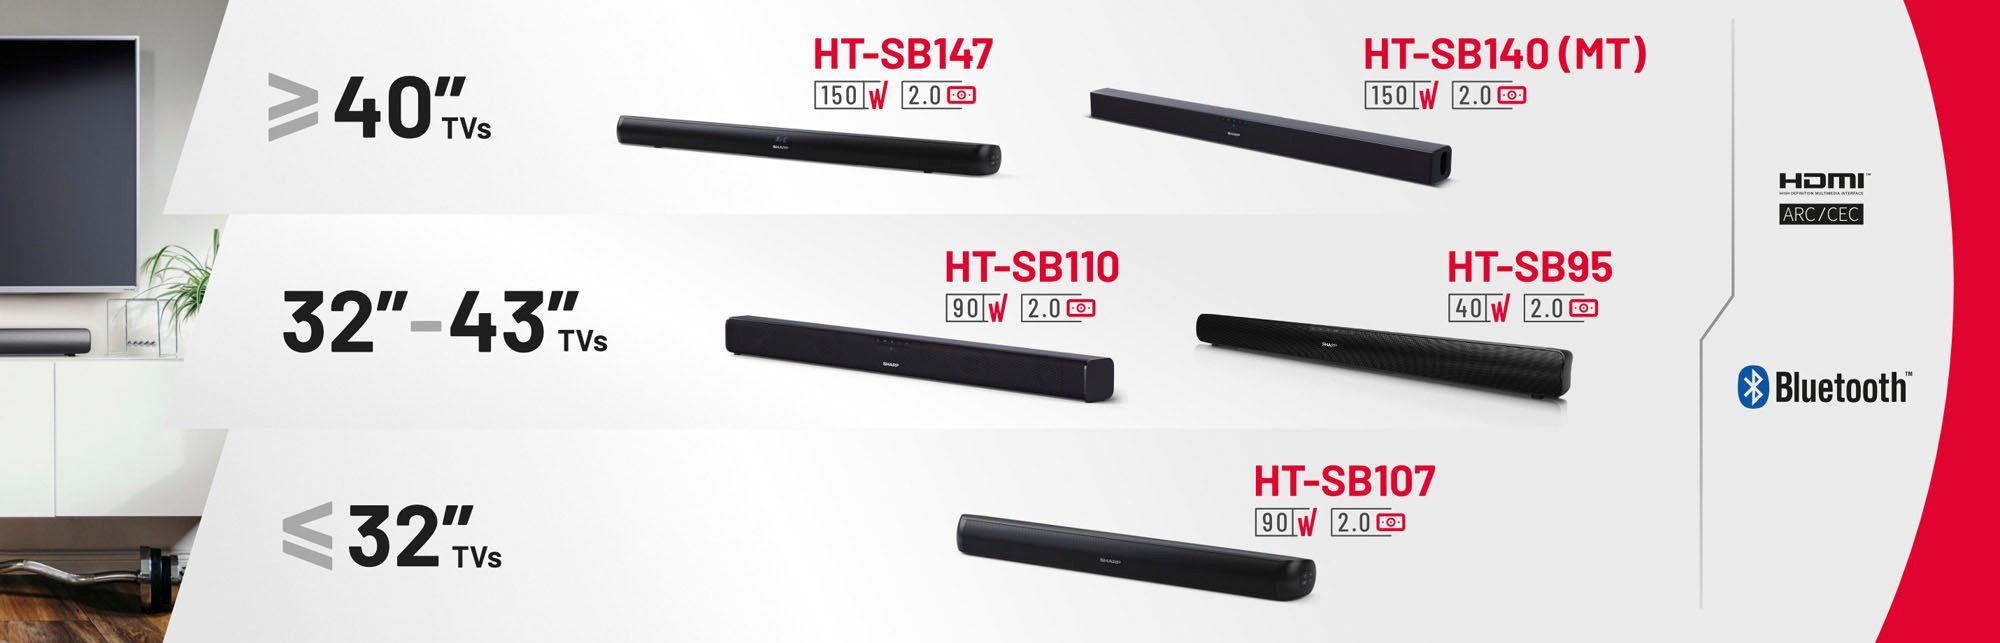 HT-SB147 Sharp (Bluetooth) Soundbar Stereo